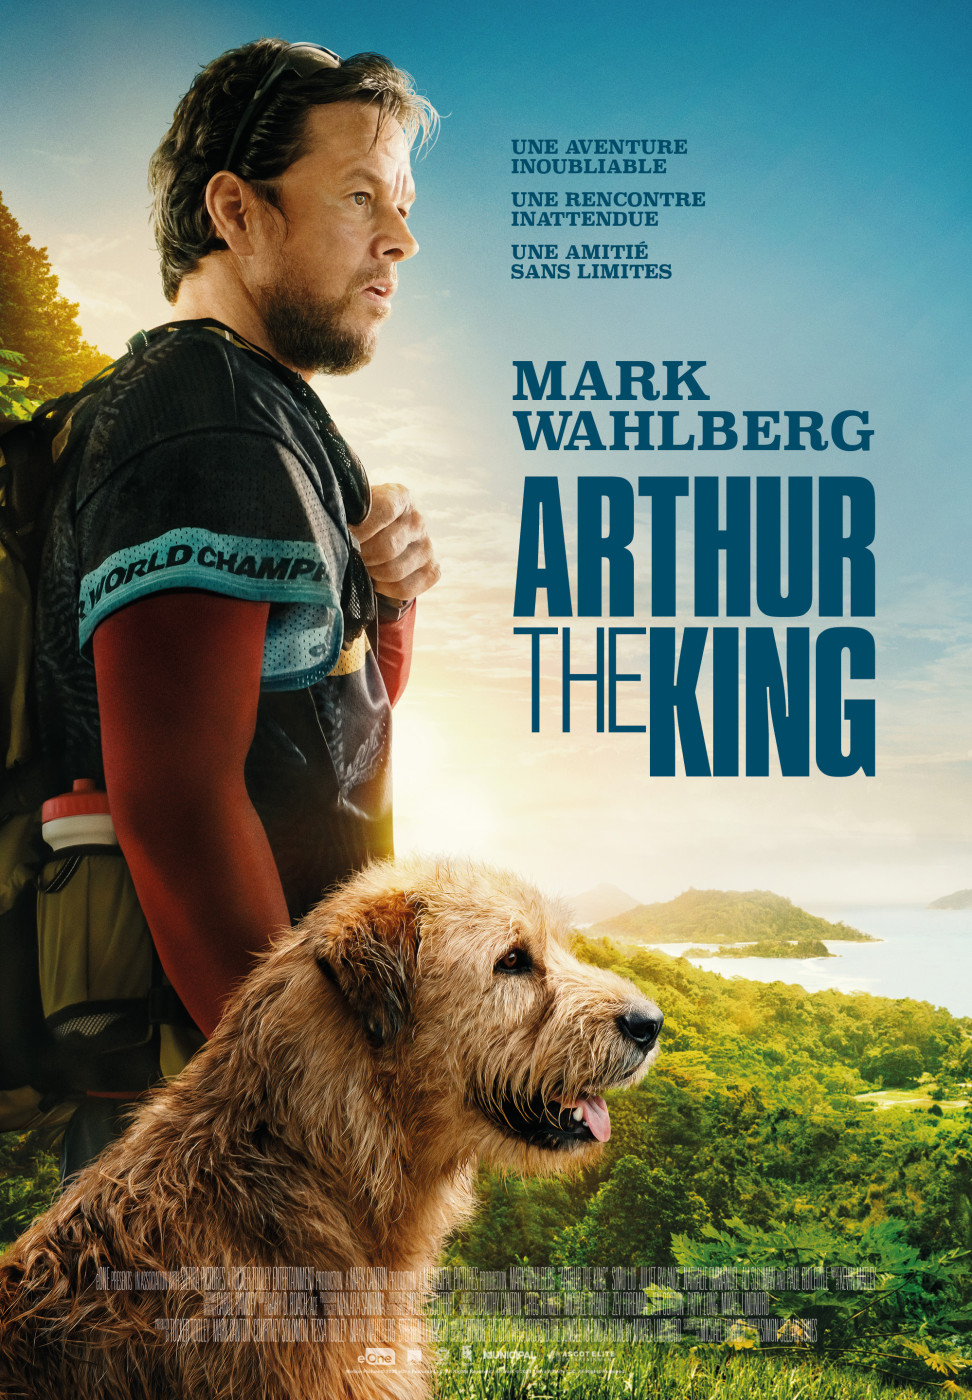 Arthur the King Artwork chf 01 F 1 Sheet 705x1015 4f